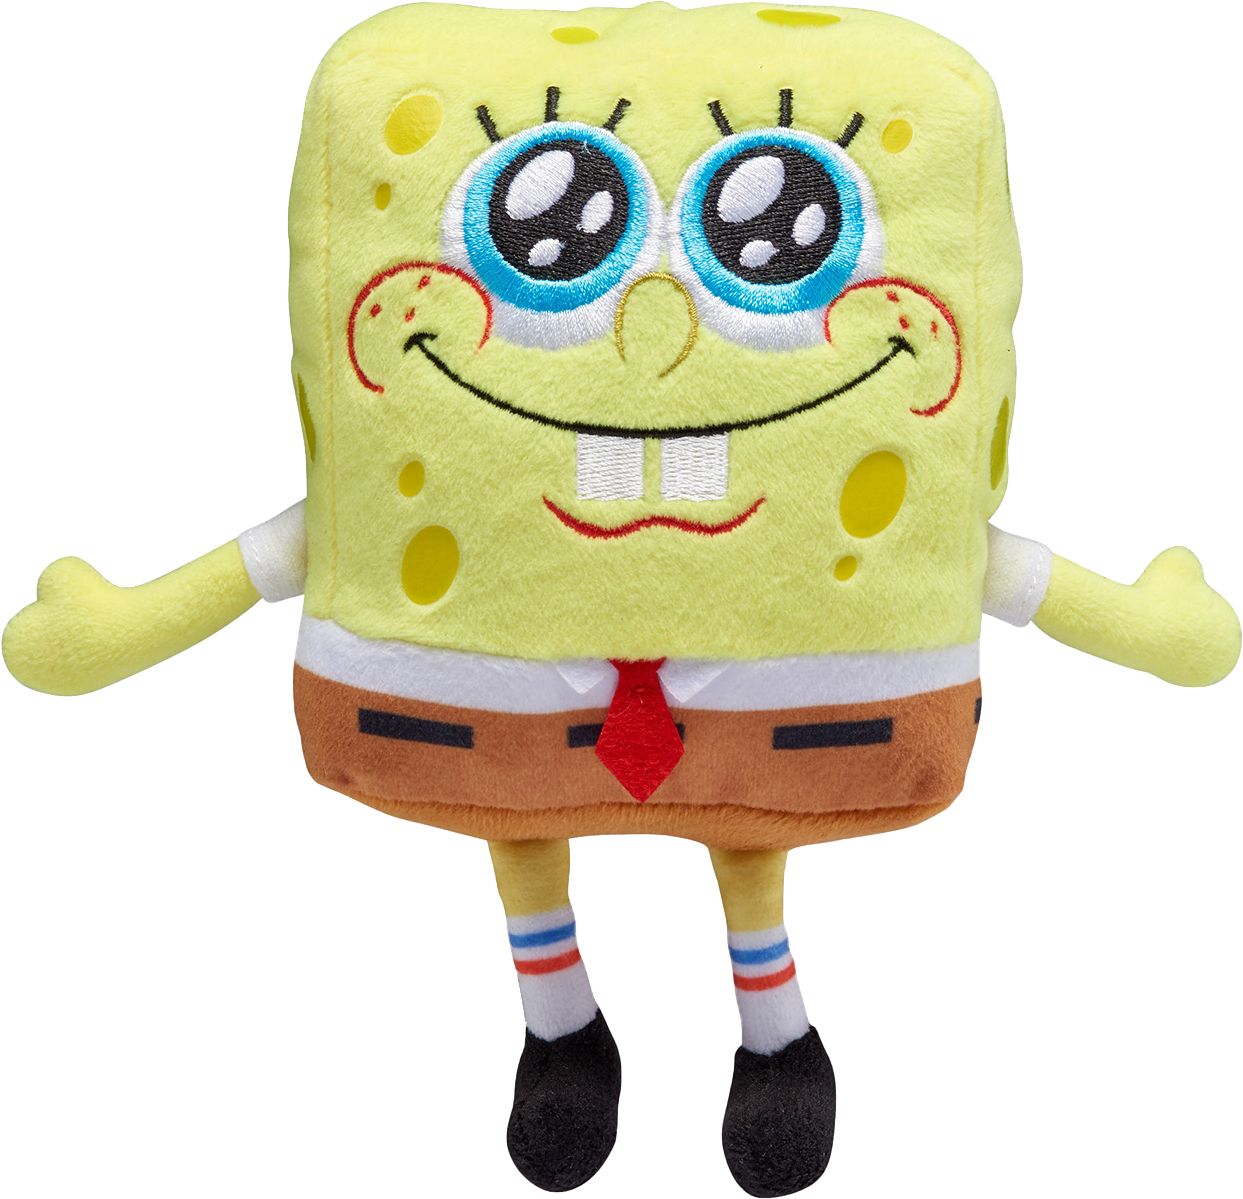 SpongeBob SquarePants Mini Plush Styles May Vary US690500 - Best Buy